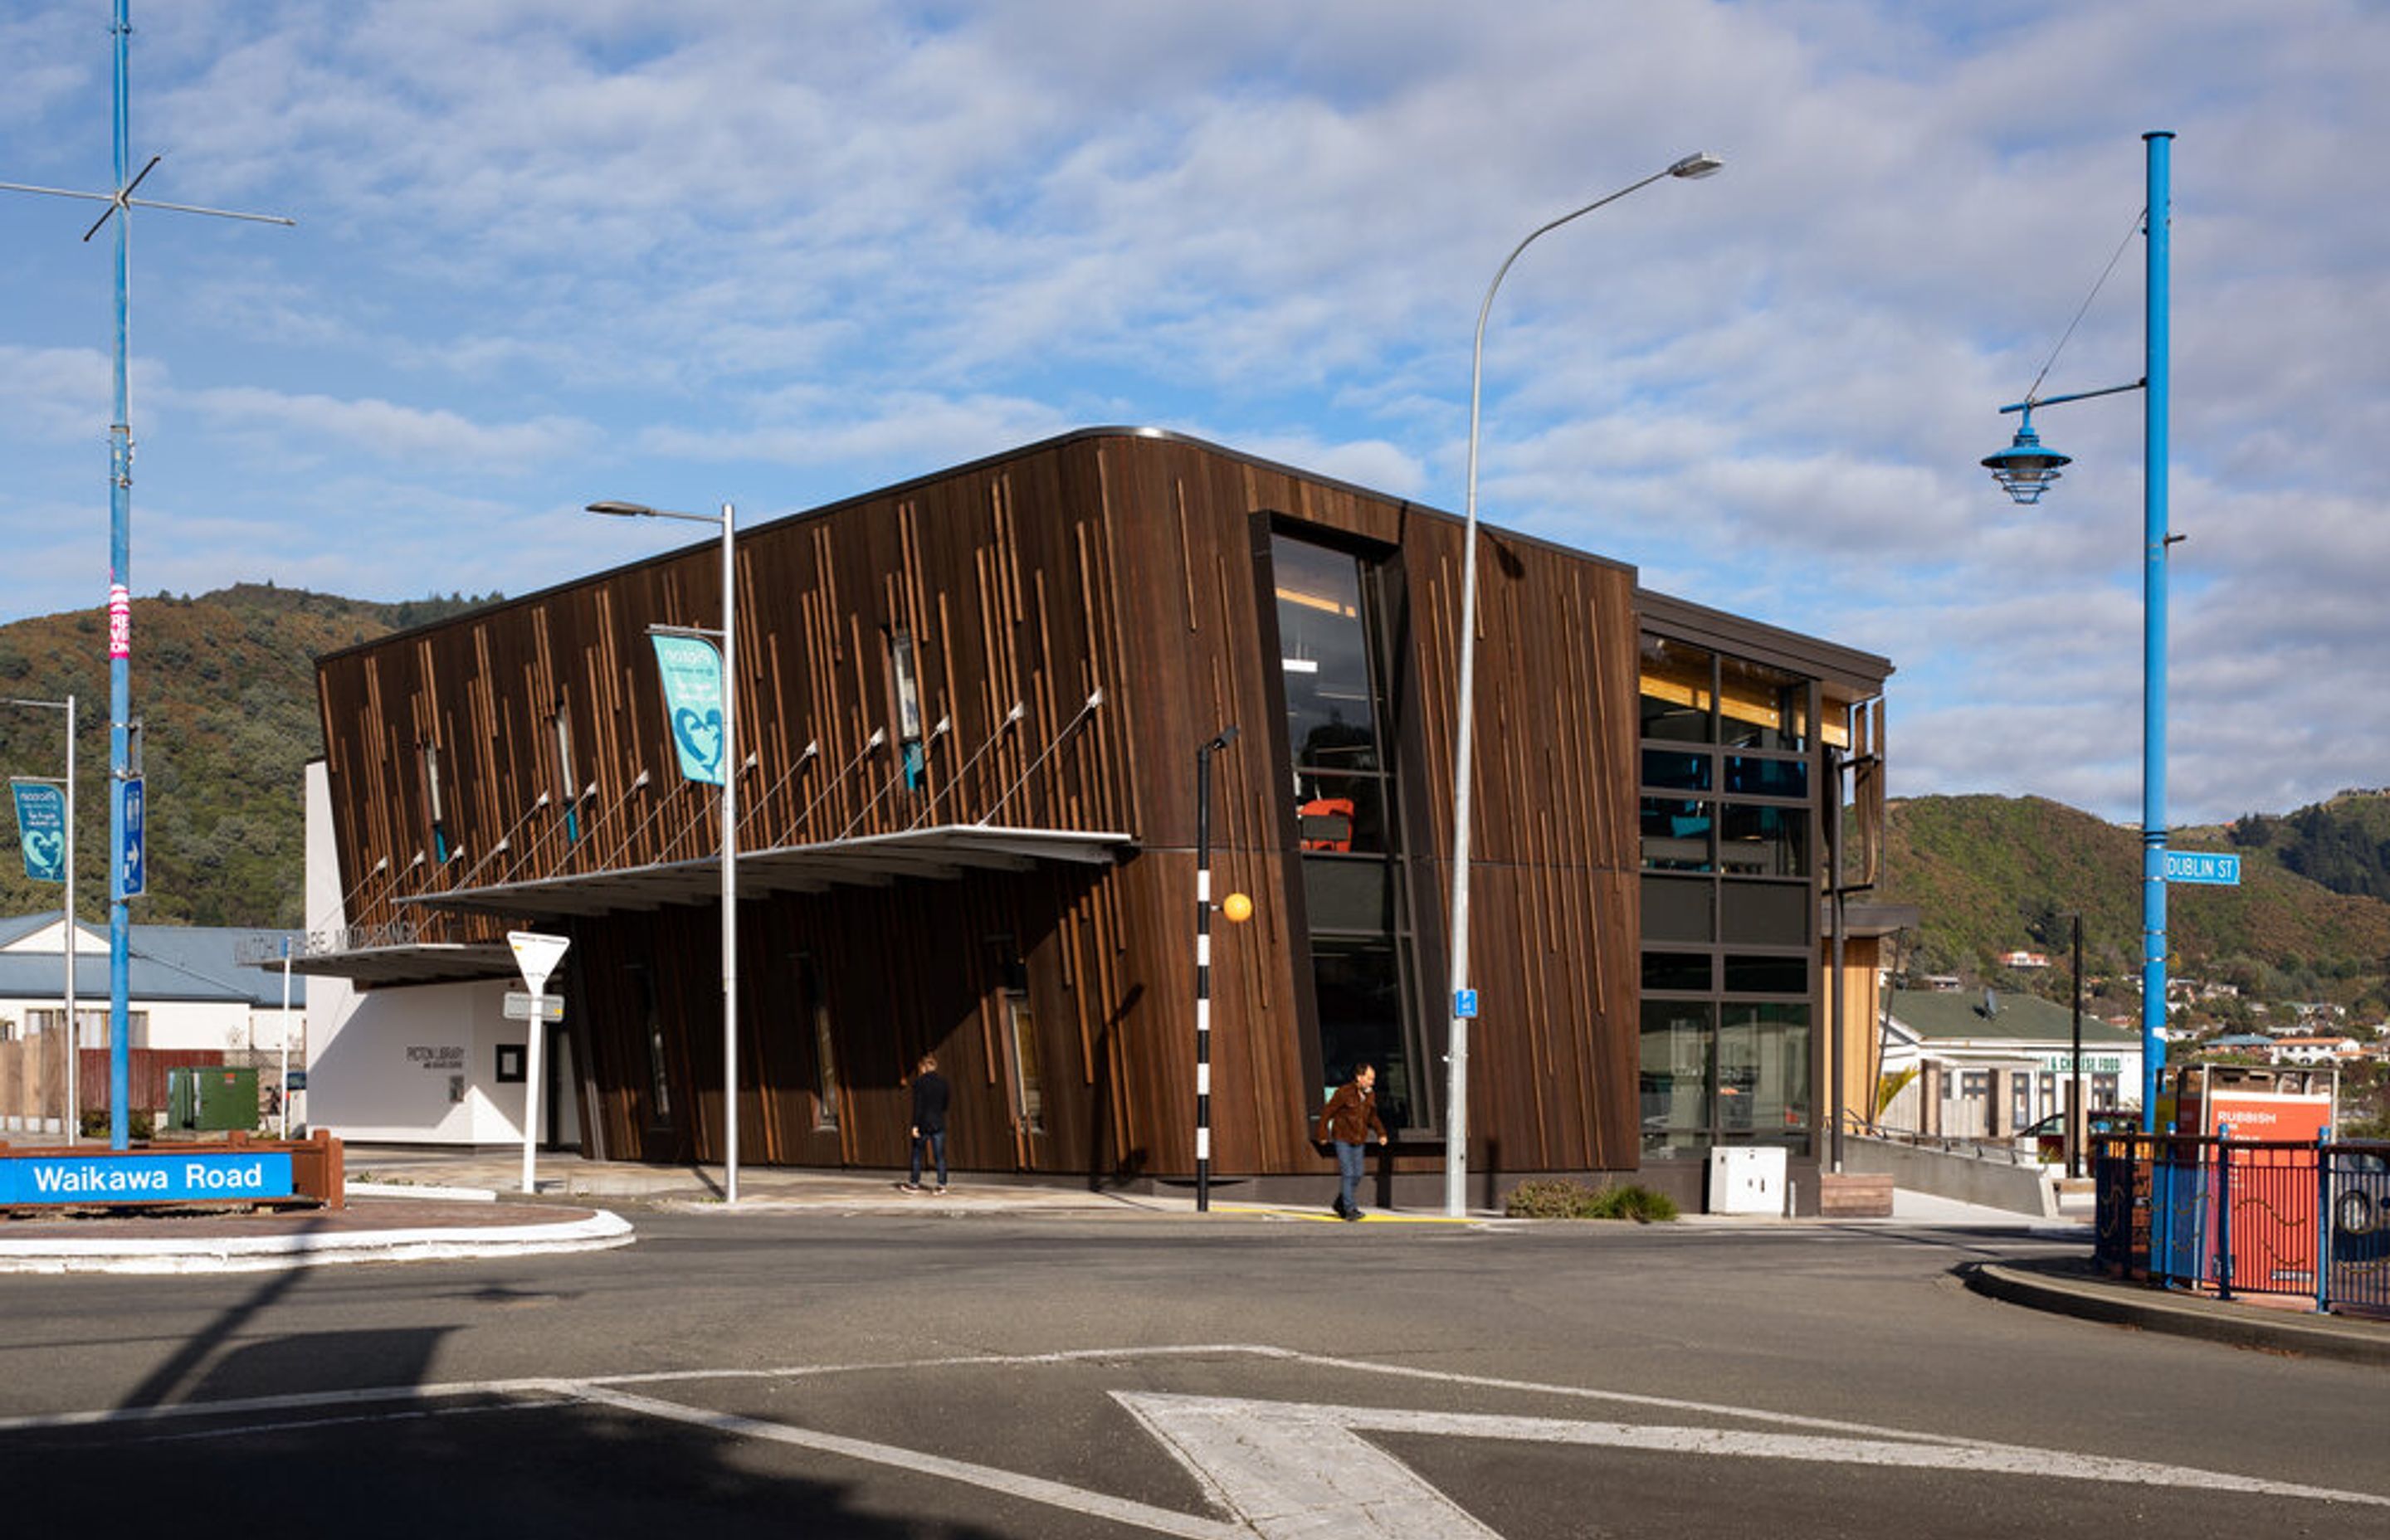 Picton Library &amp; Council Service Centre